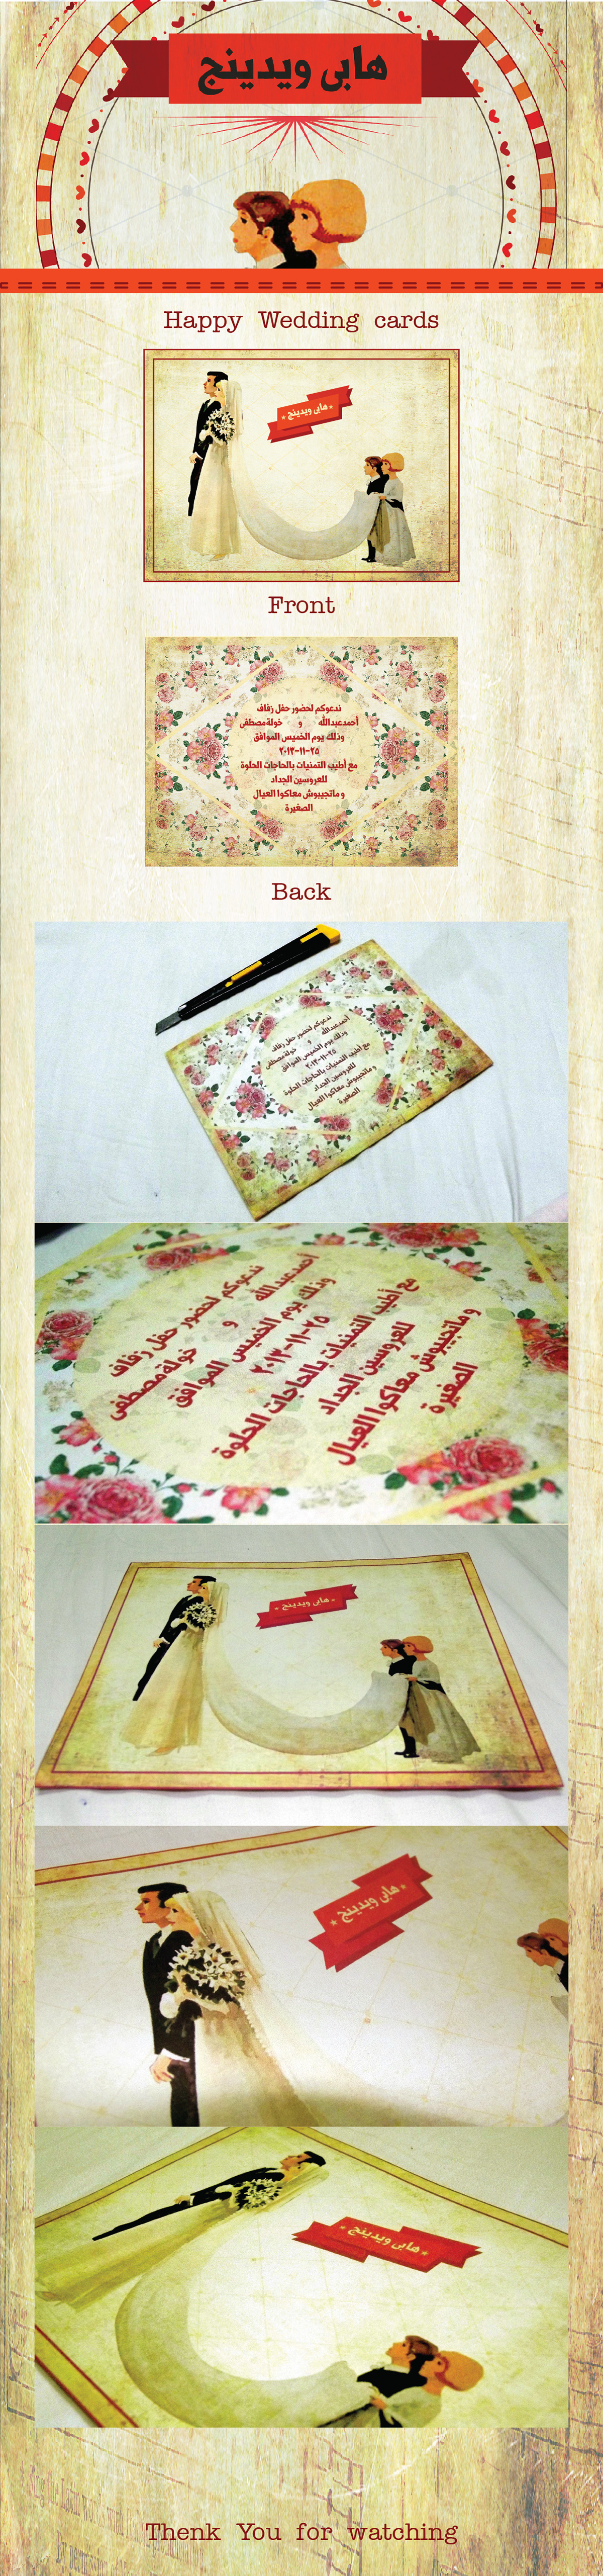 wedding card Invitation happy Illustrator vintage old Authentic print photo envelope floral pattern arabic